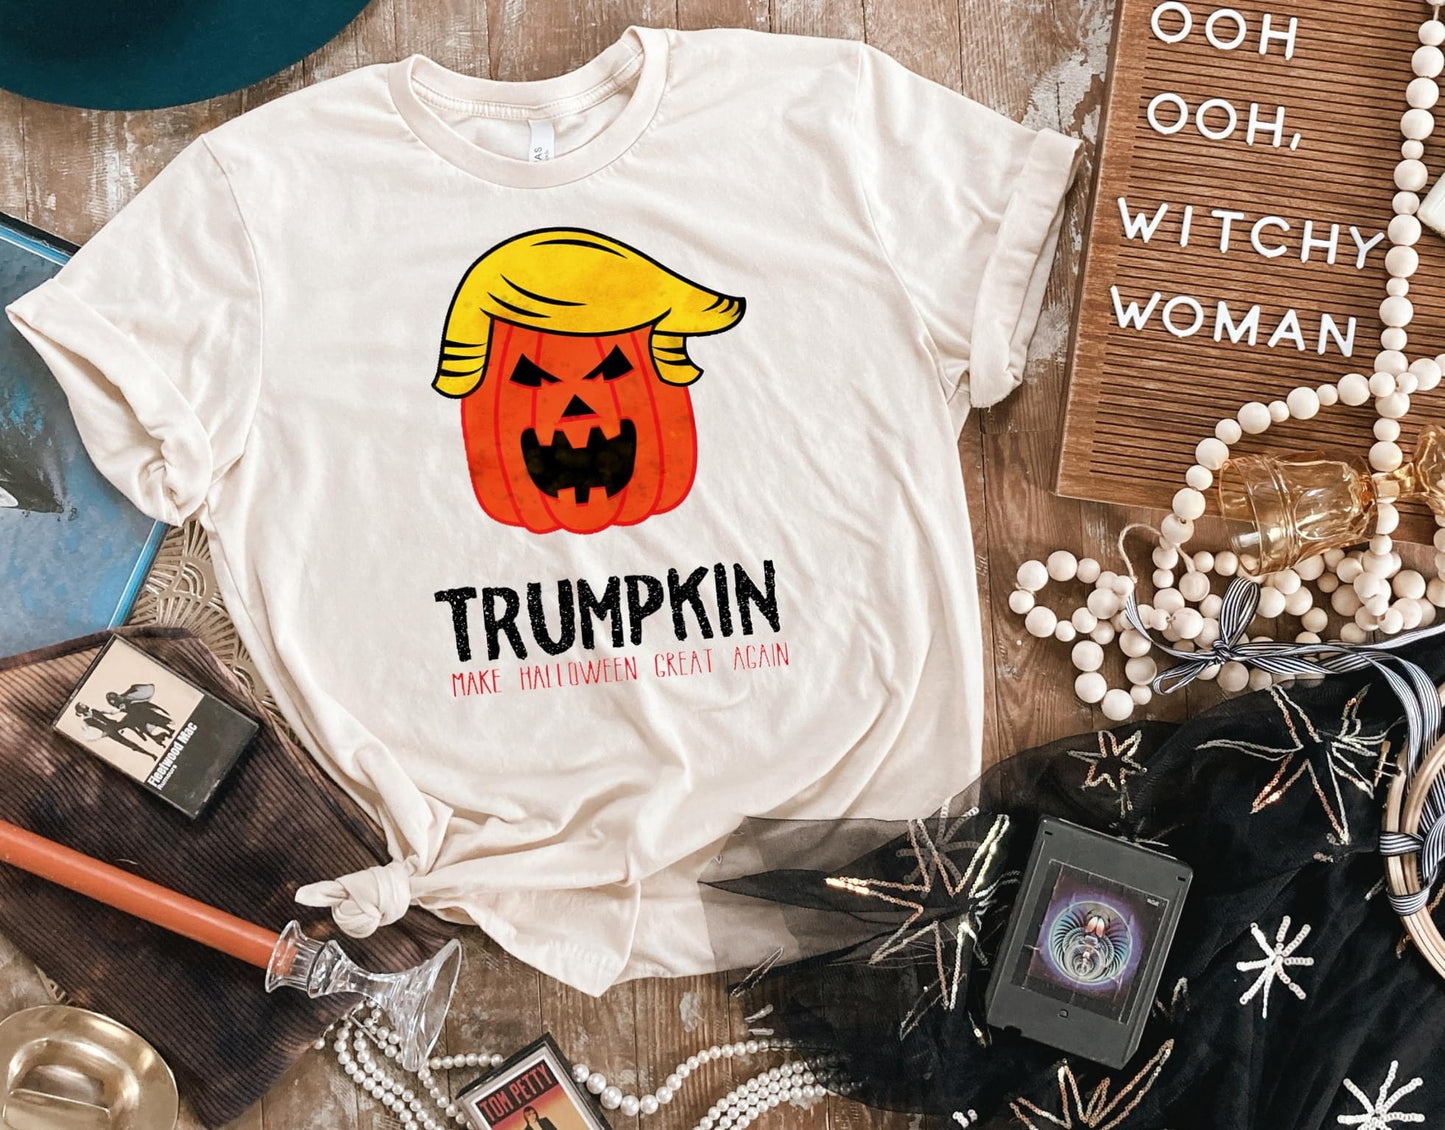 PREORDER - Trumpkin Make Halloween Great Again Soft Boutique Tee